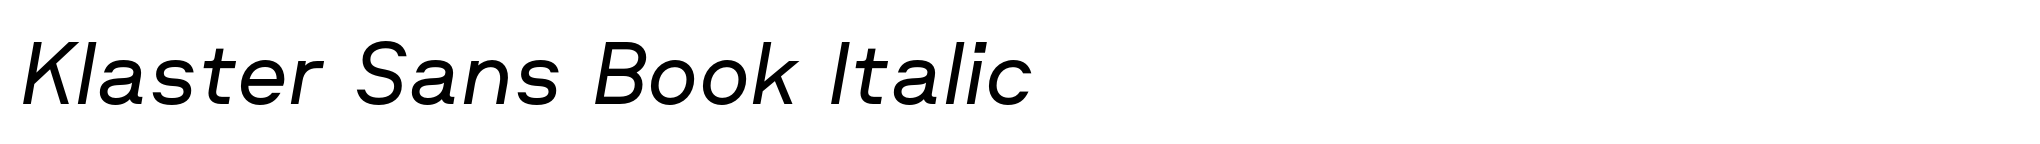 Klaster Sans Book Italic image